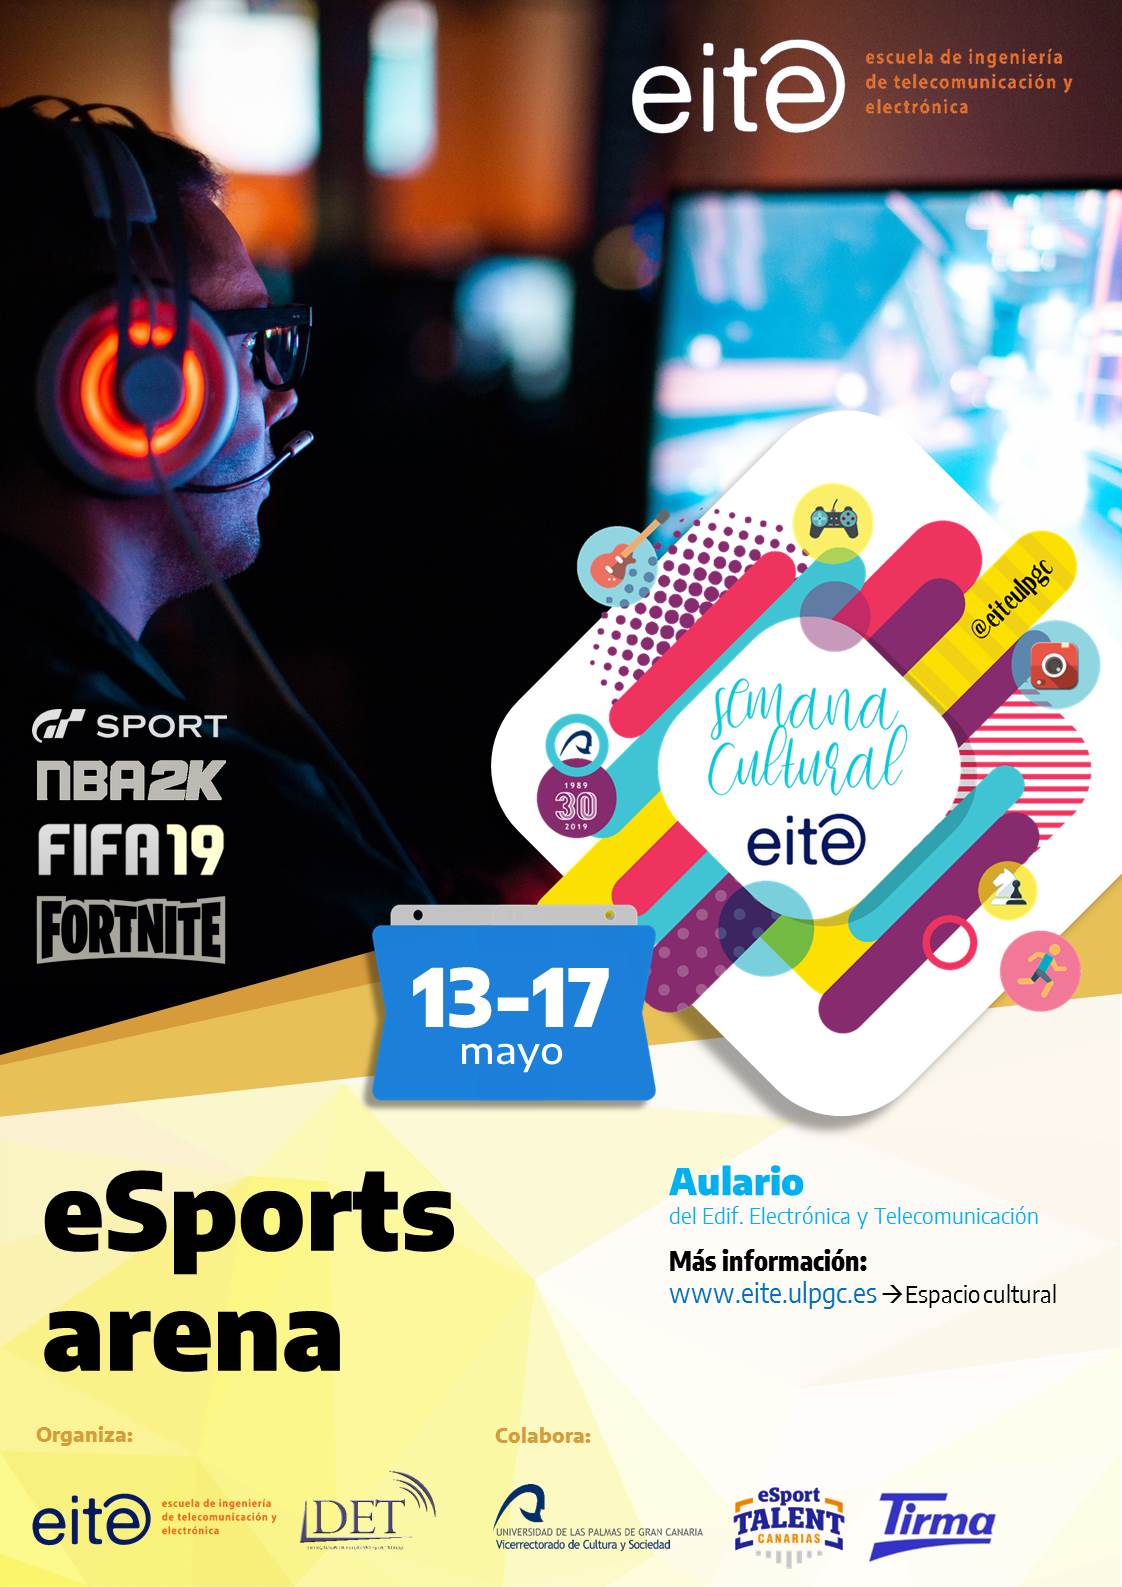 cartel esportsarena semanaculturalEITE 2019 v01